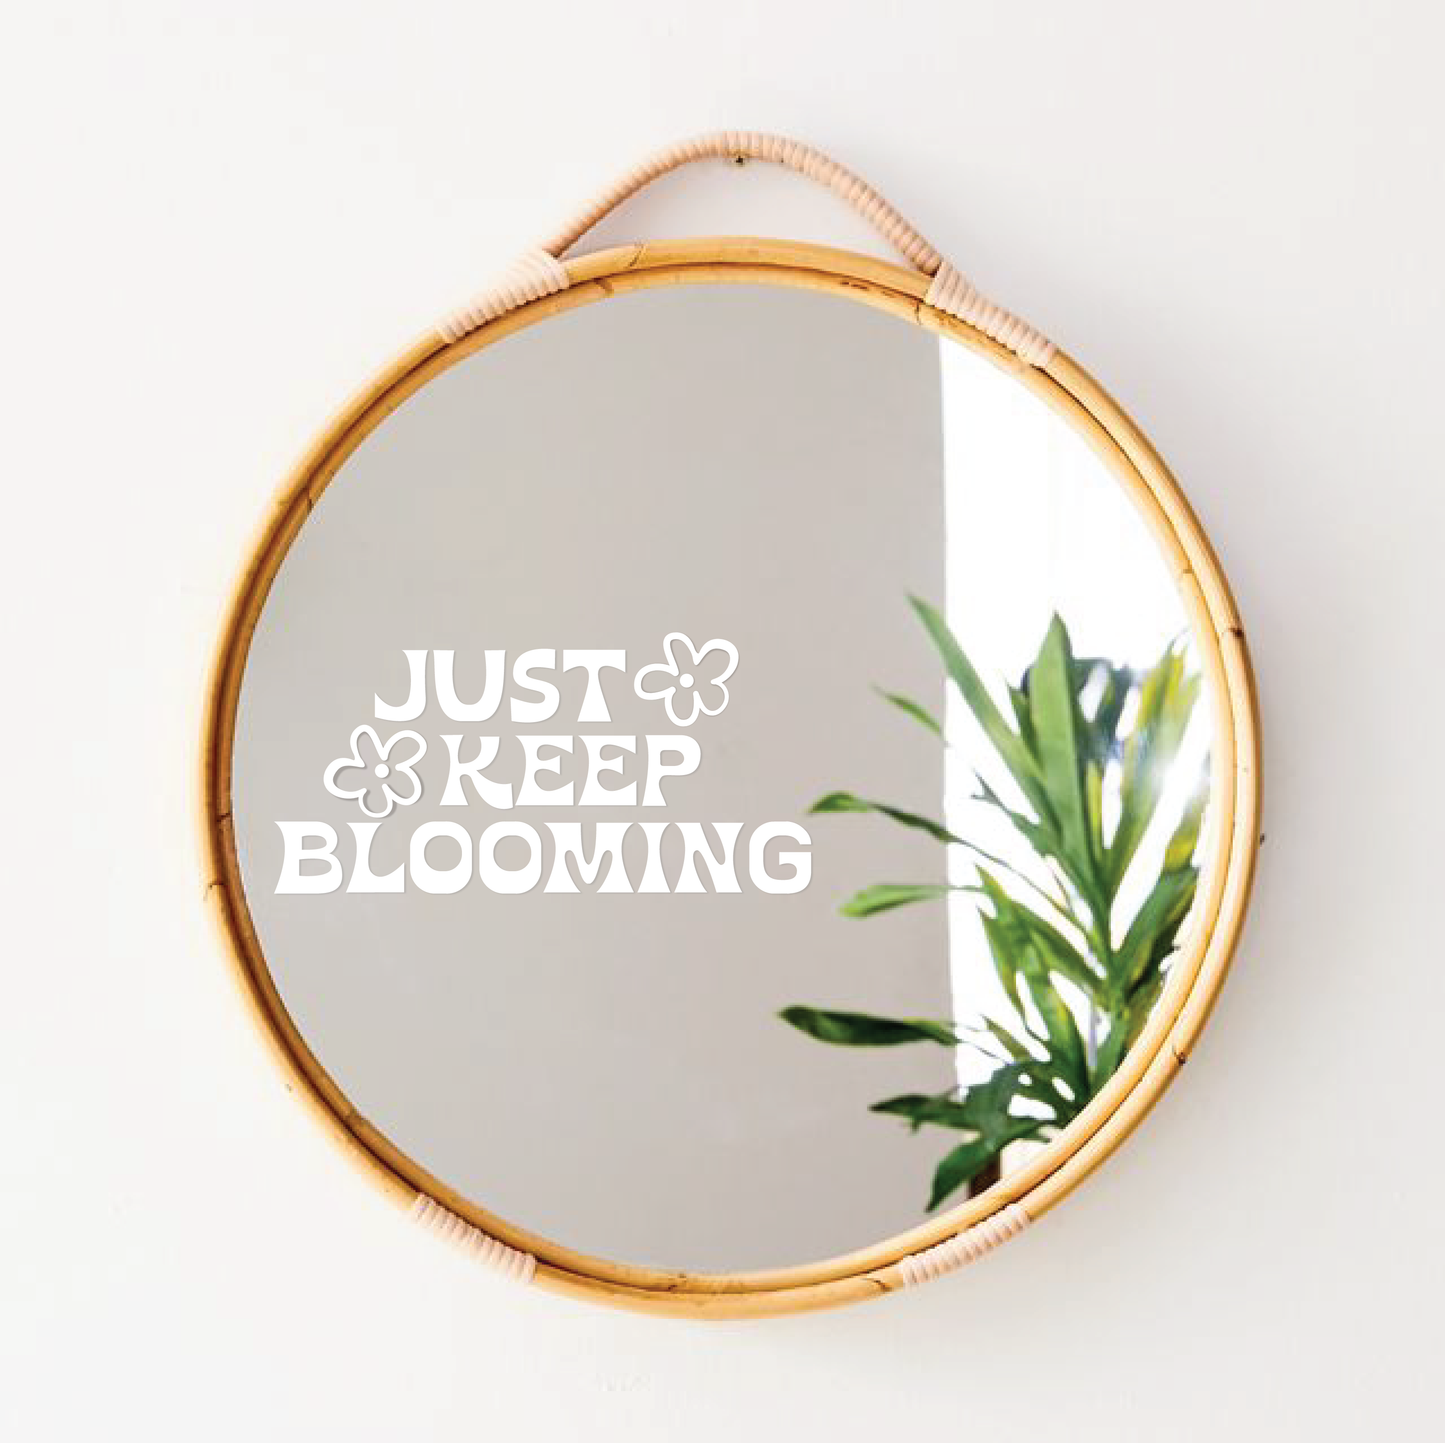 Just Keep Blooming Mirror Decal